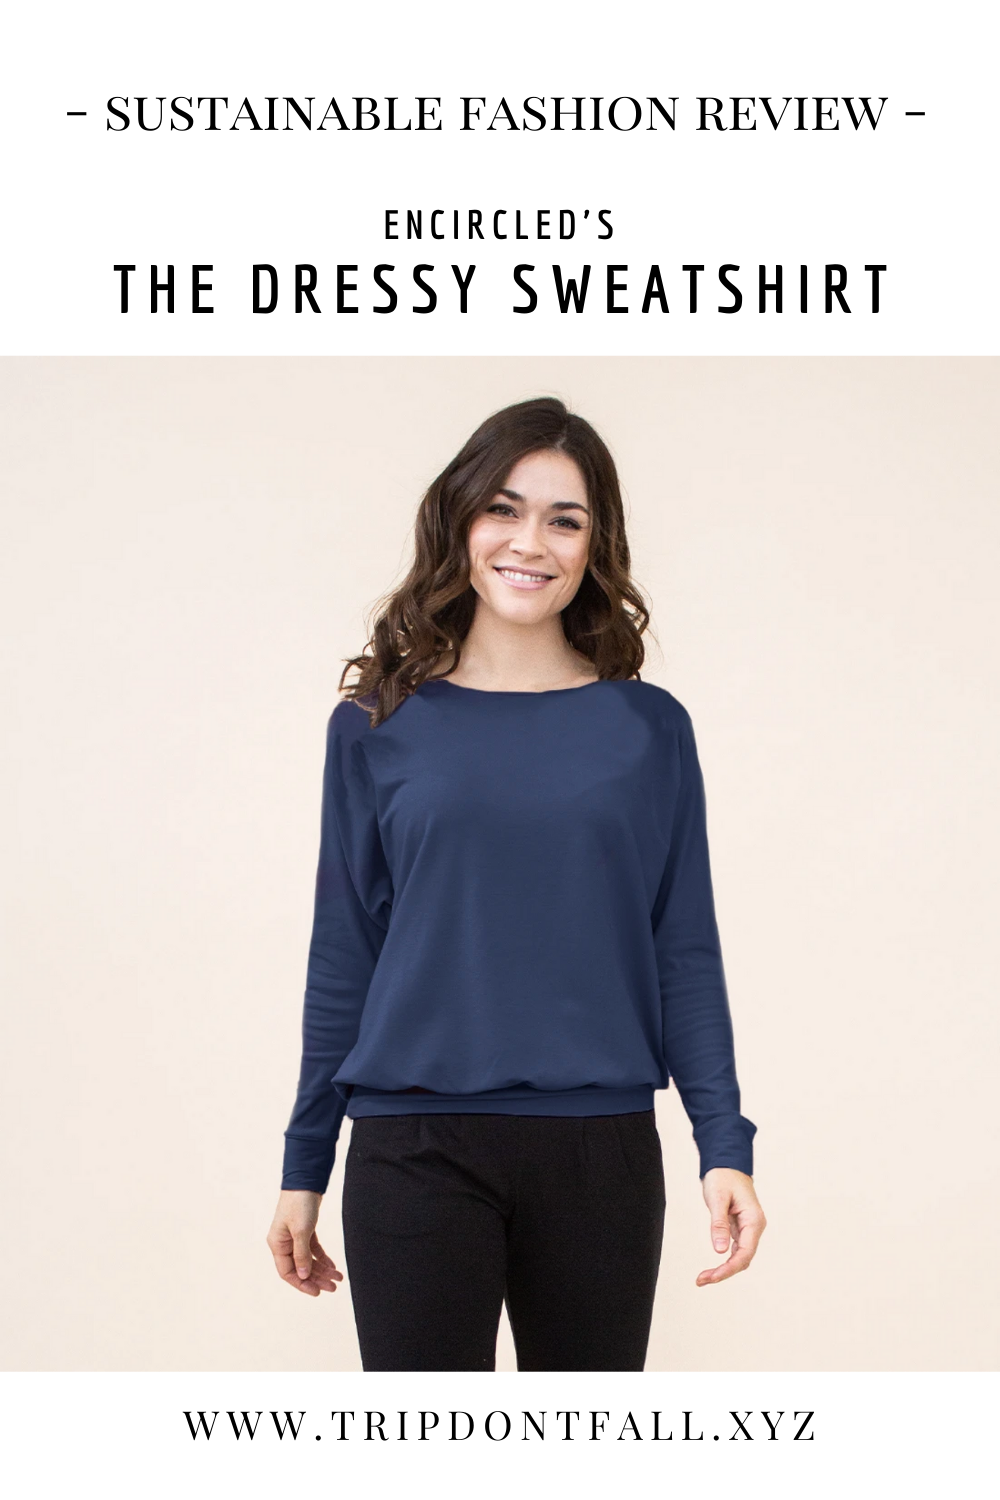 Encircled Clothing Review - Encircled Dressy Sweatshirt Review